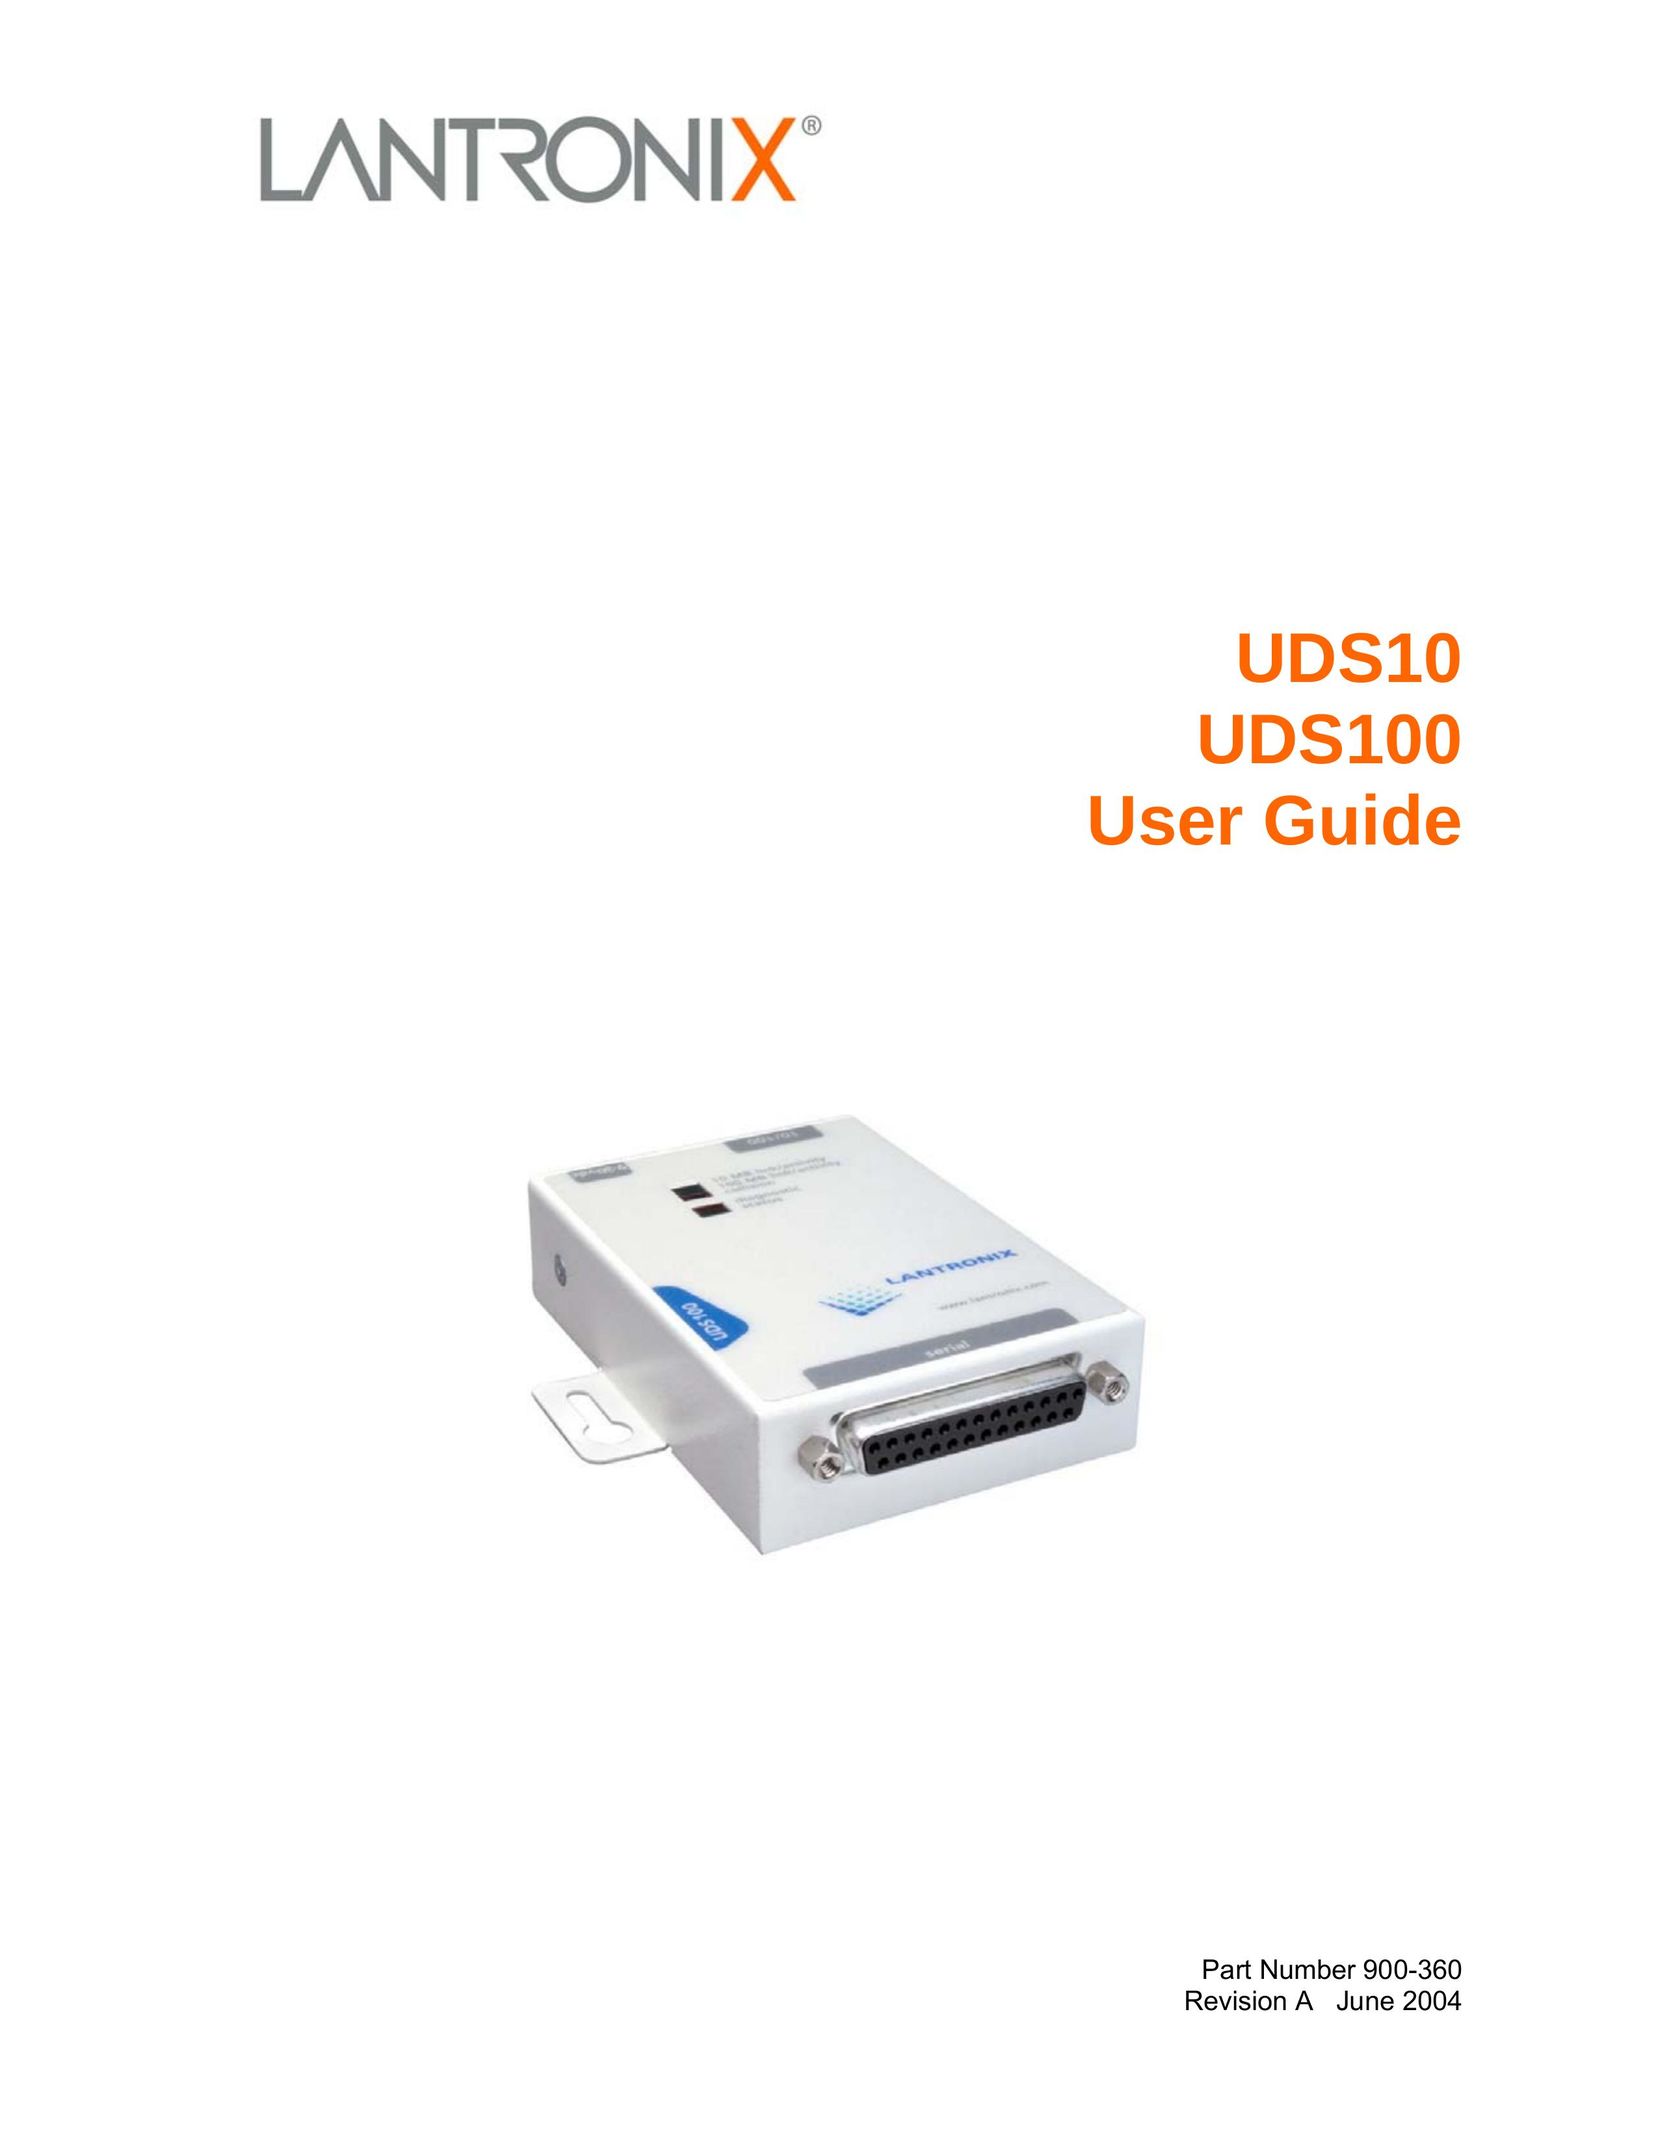 Lantronix UDS10 Network Card User Manual